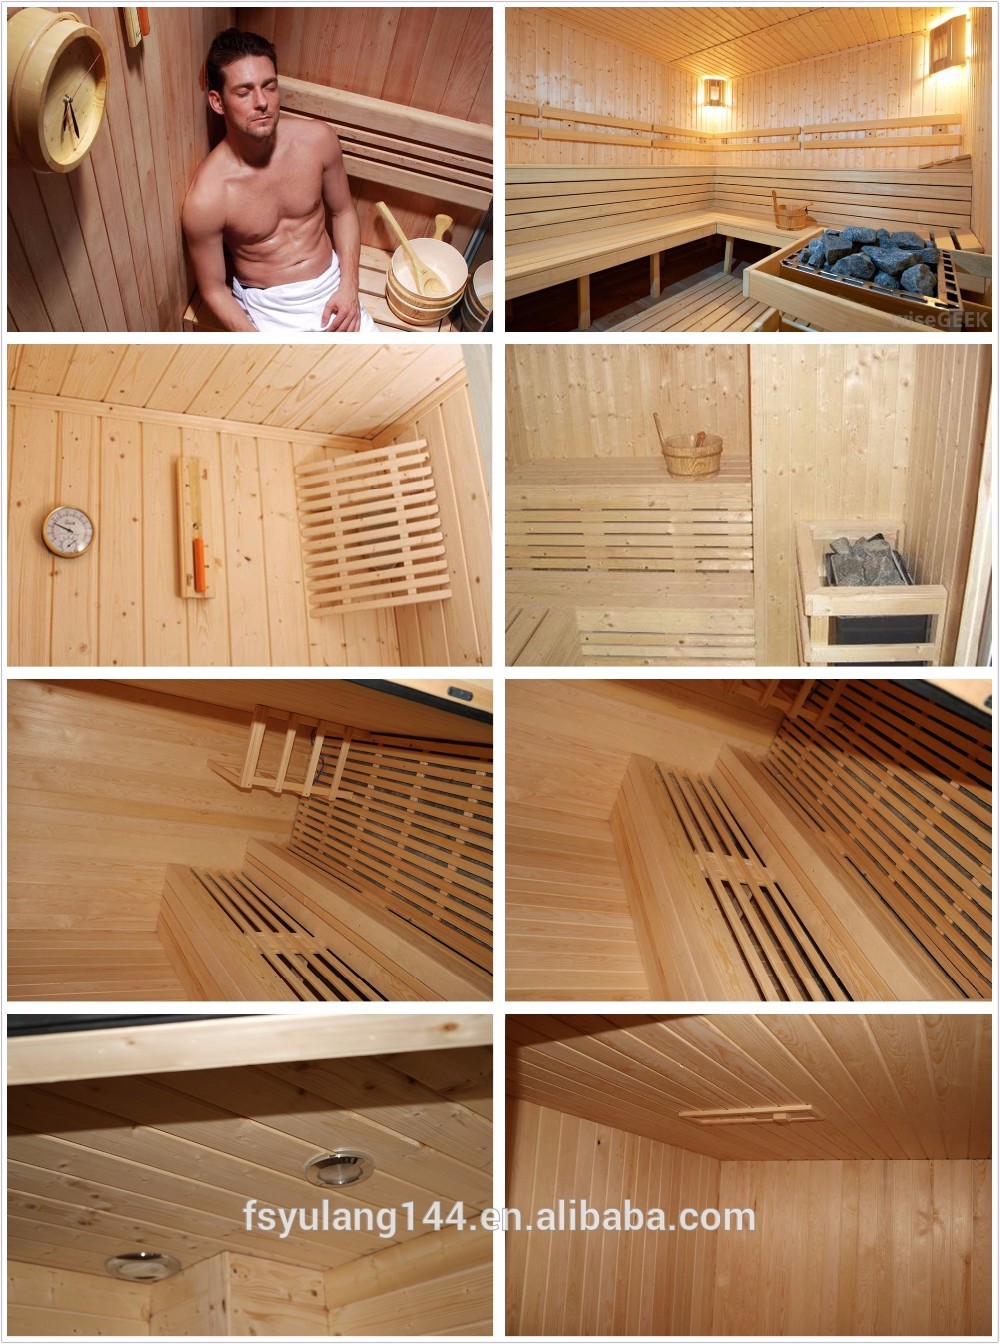 sauna room details-1.jpg